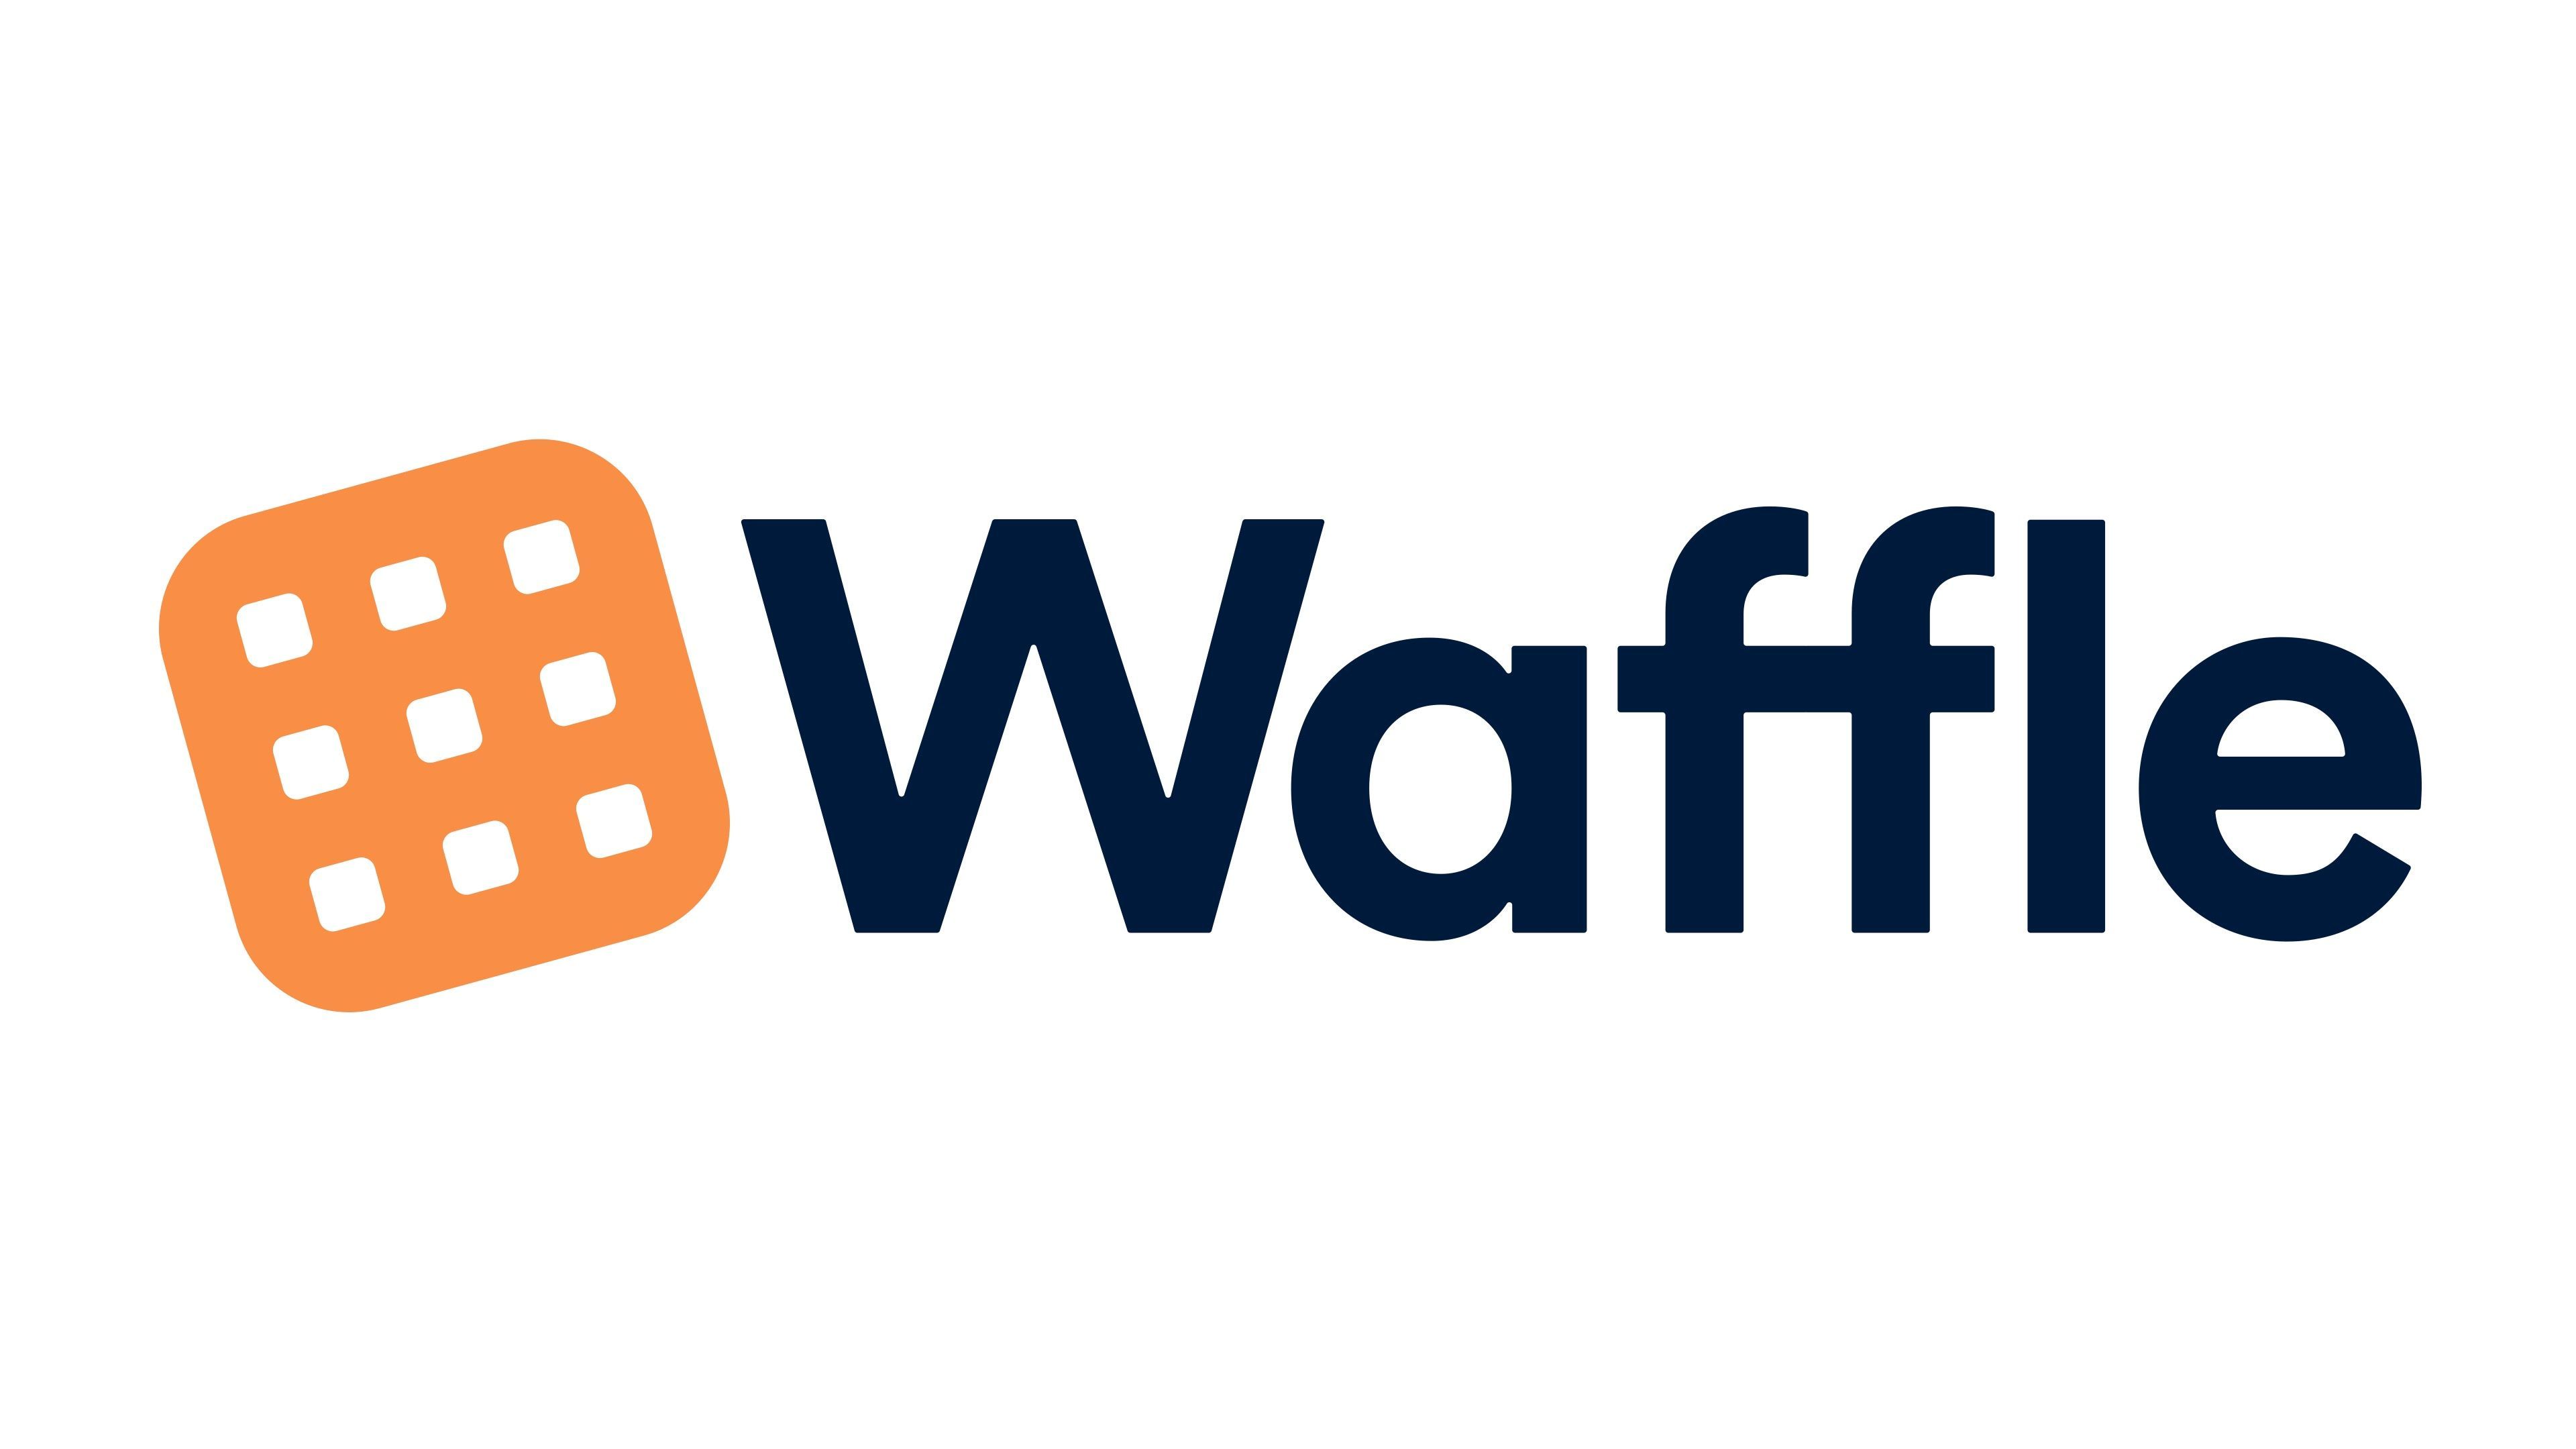 Waffle Logo PNG Transparent & SVG Vector - Freebie Supply